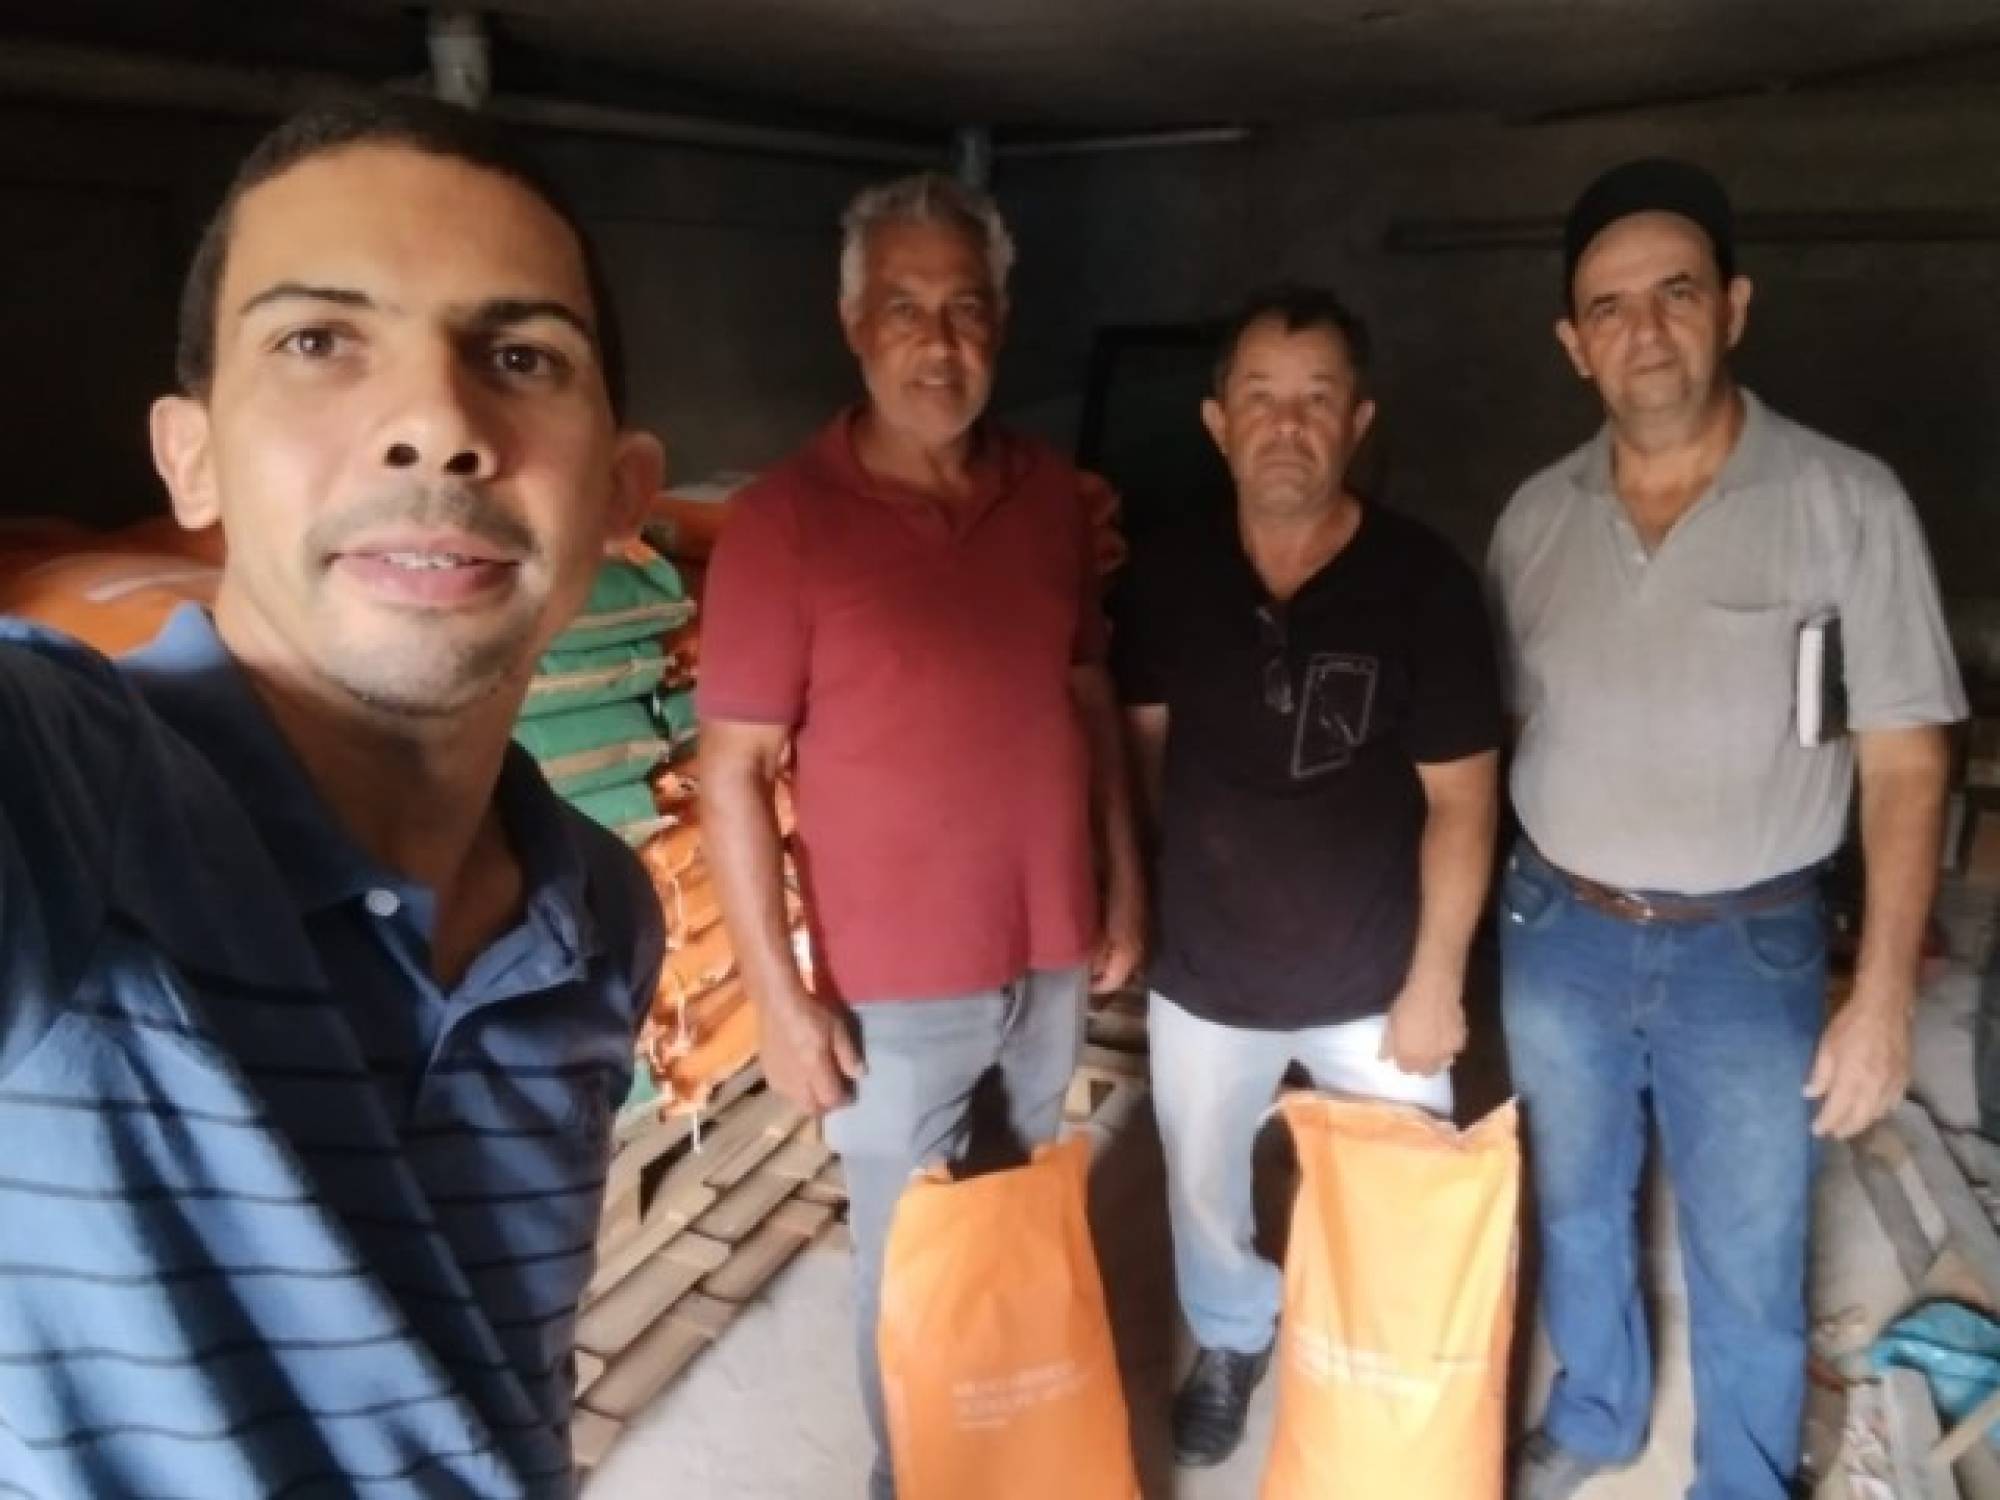  Vereadores José Luiz, Gerson Ramos e Geraldo Toledo acompanham entregas de sementes de milho para os produtores rurais de Urucânia.